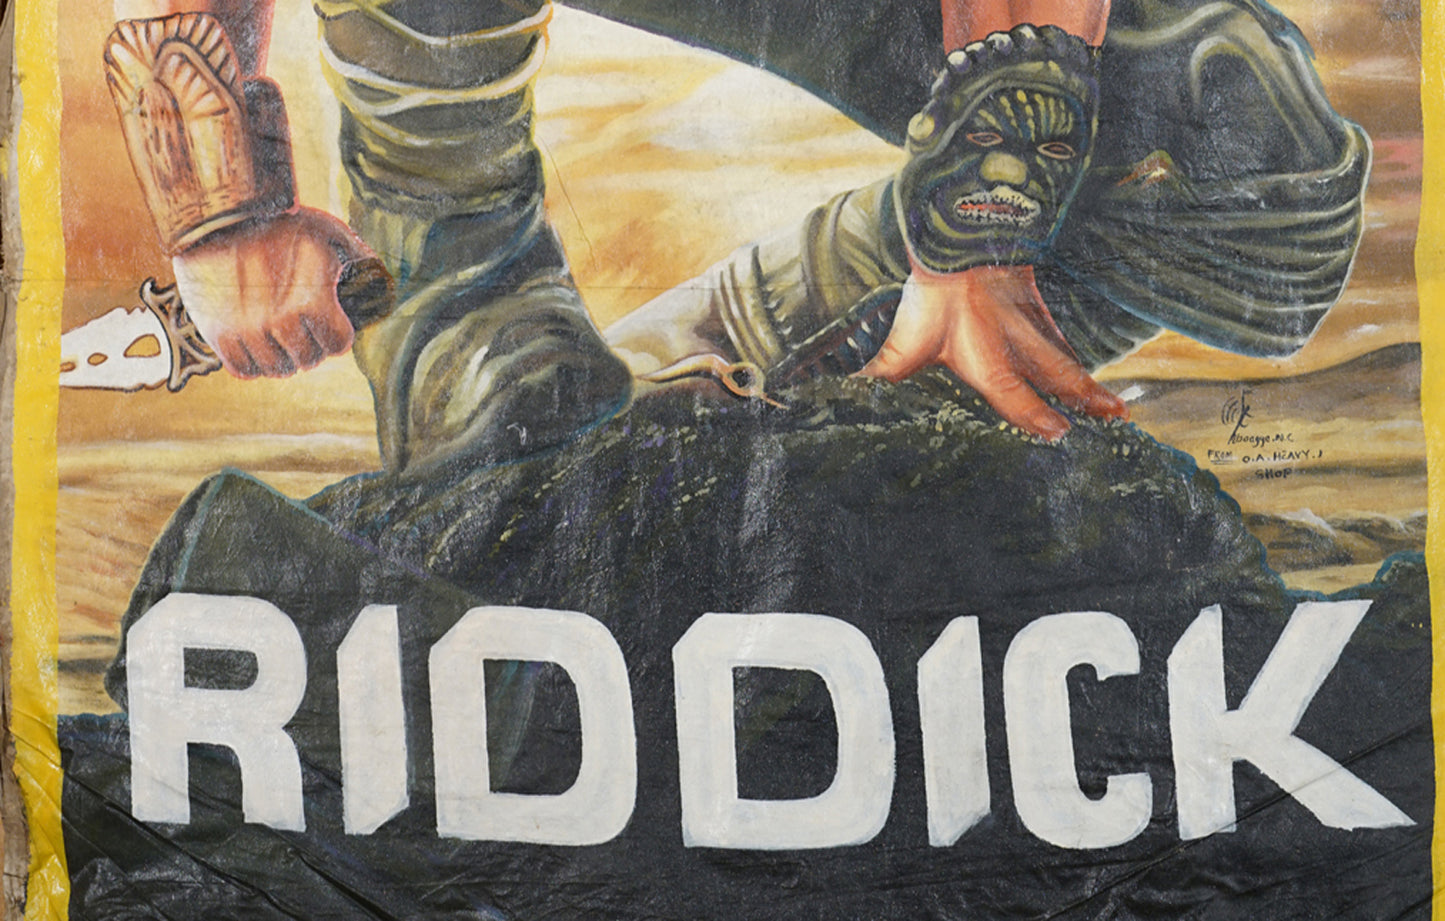 "Riddick" by O.A. Heavy J. Shop